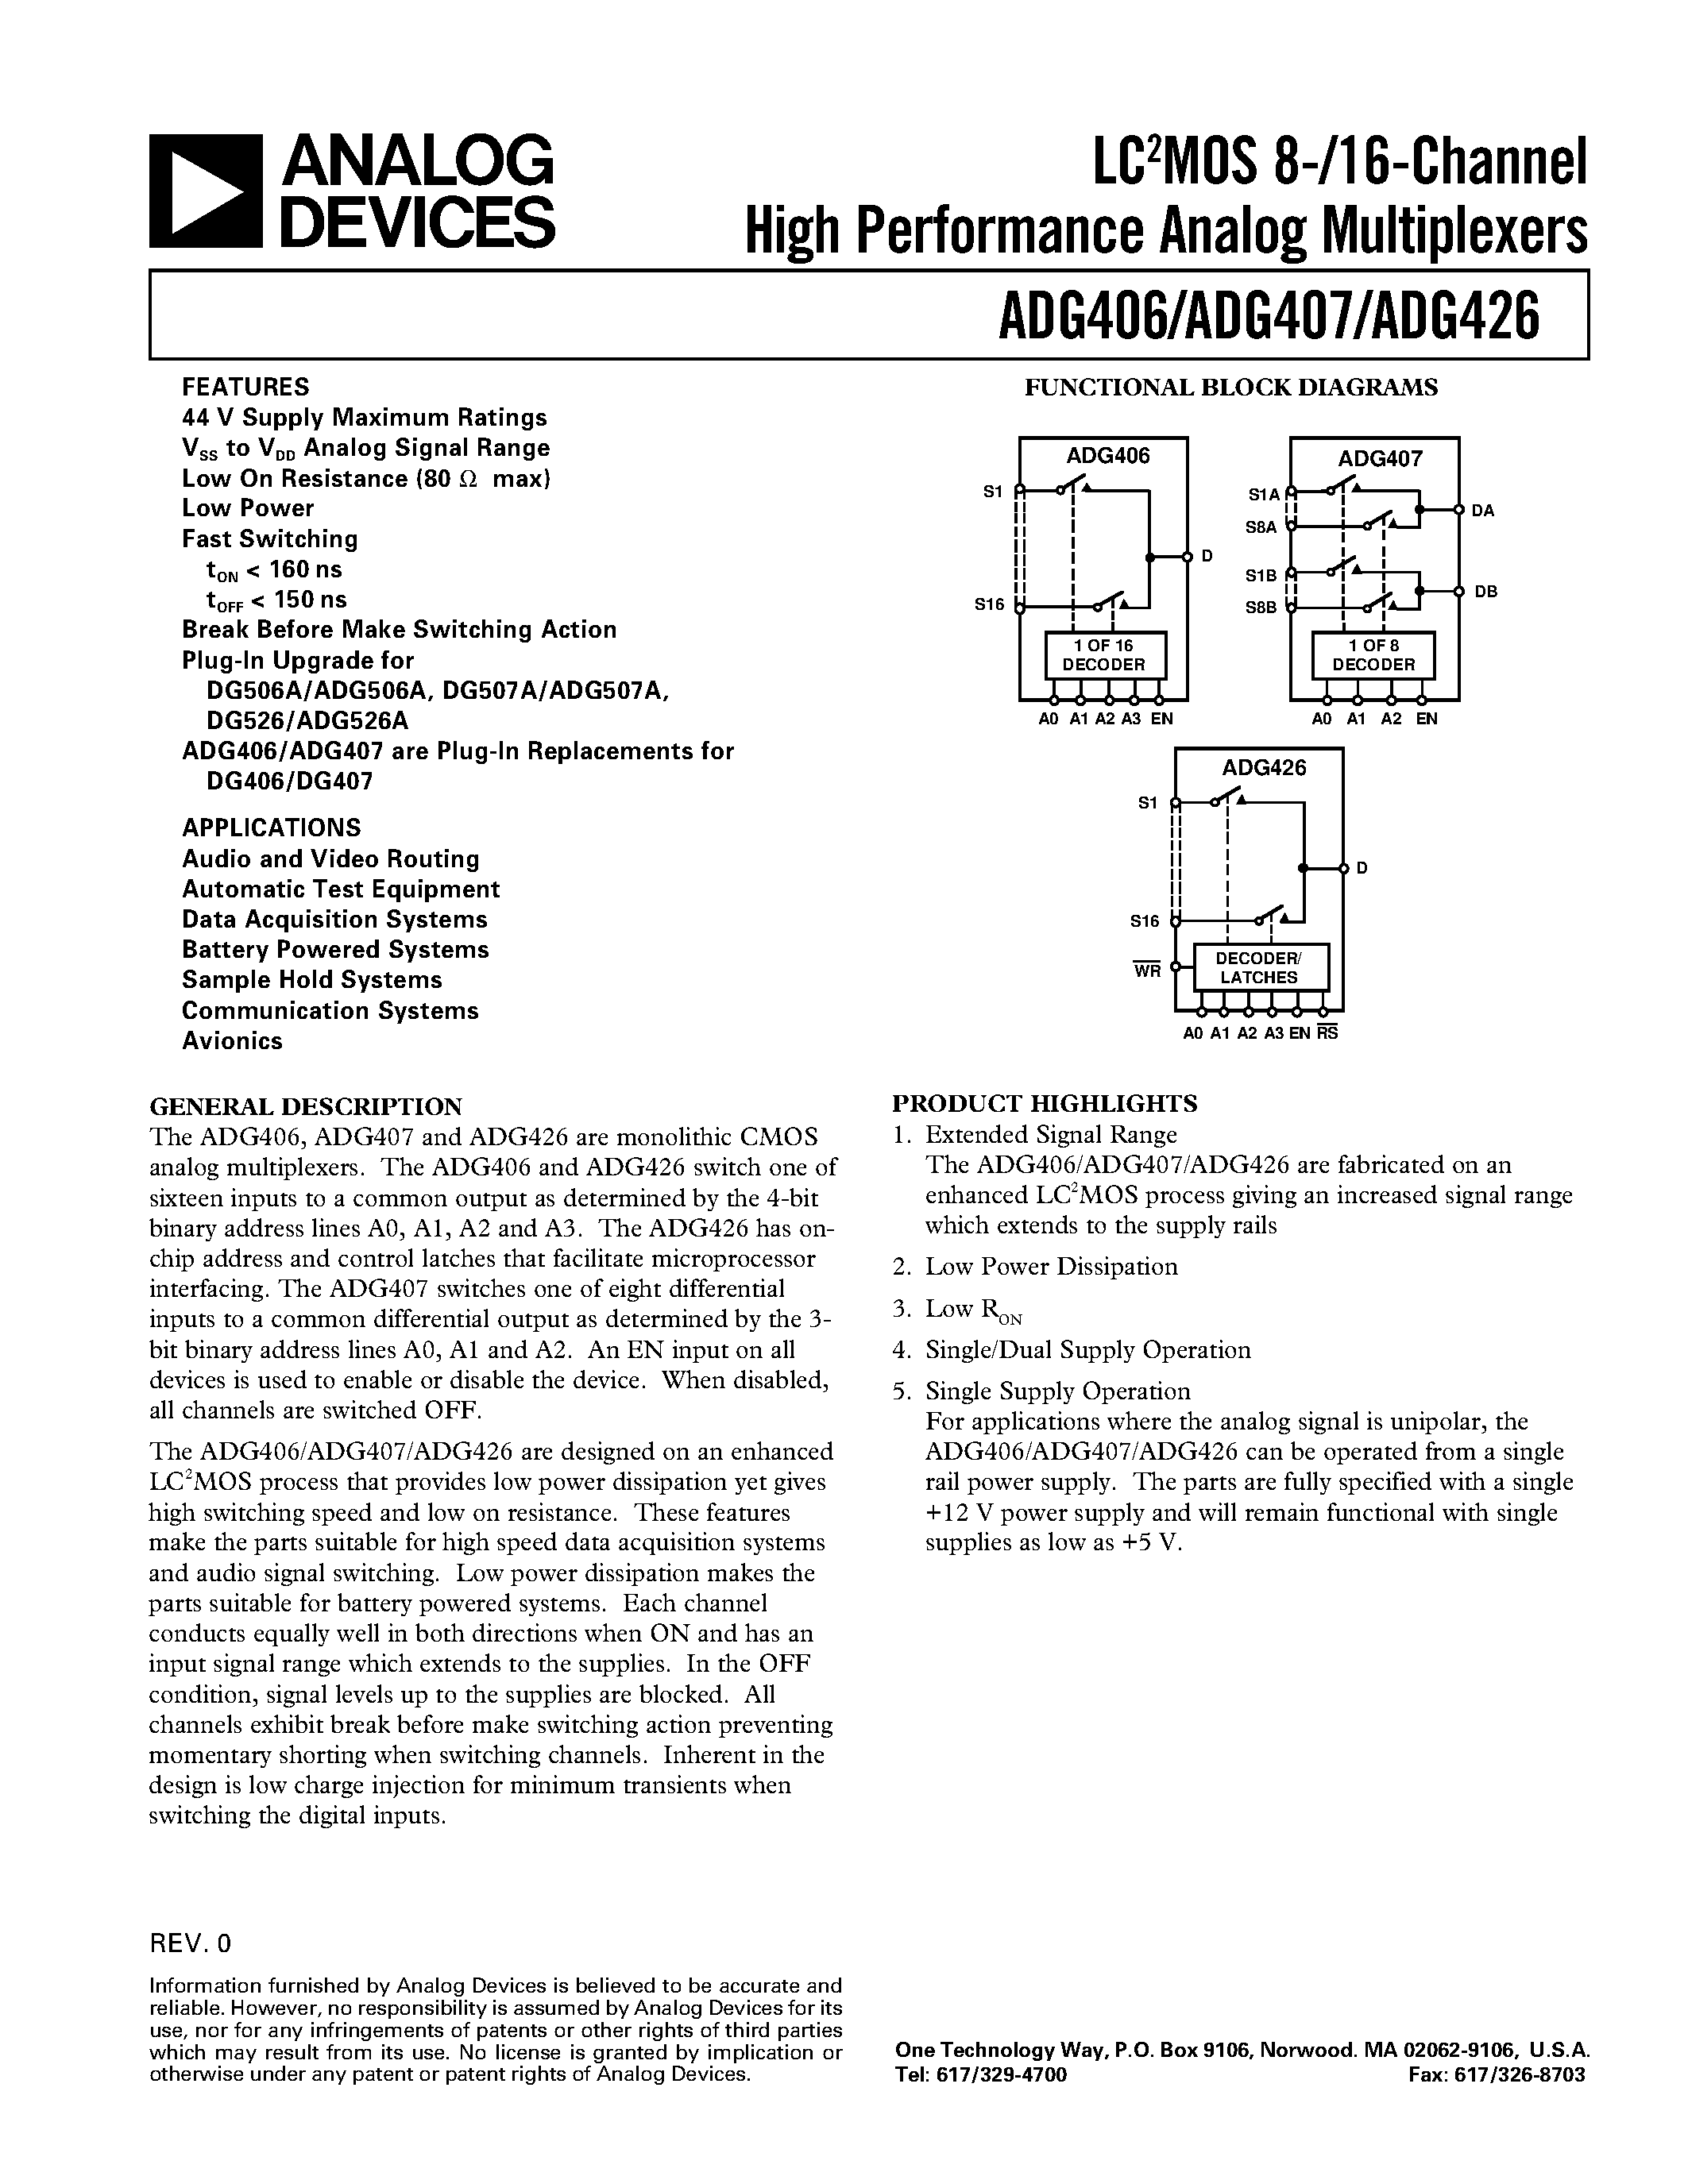 Даташит ADG407 - LC2MOS 8-/16-Channel High Performance Analog Multiplexers страница 1